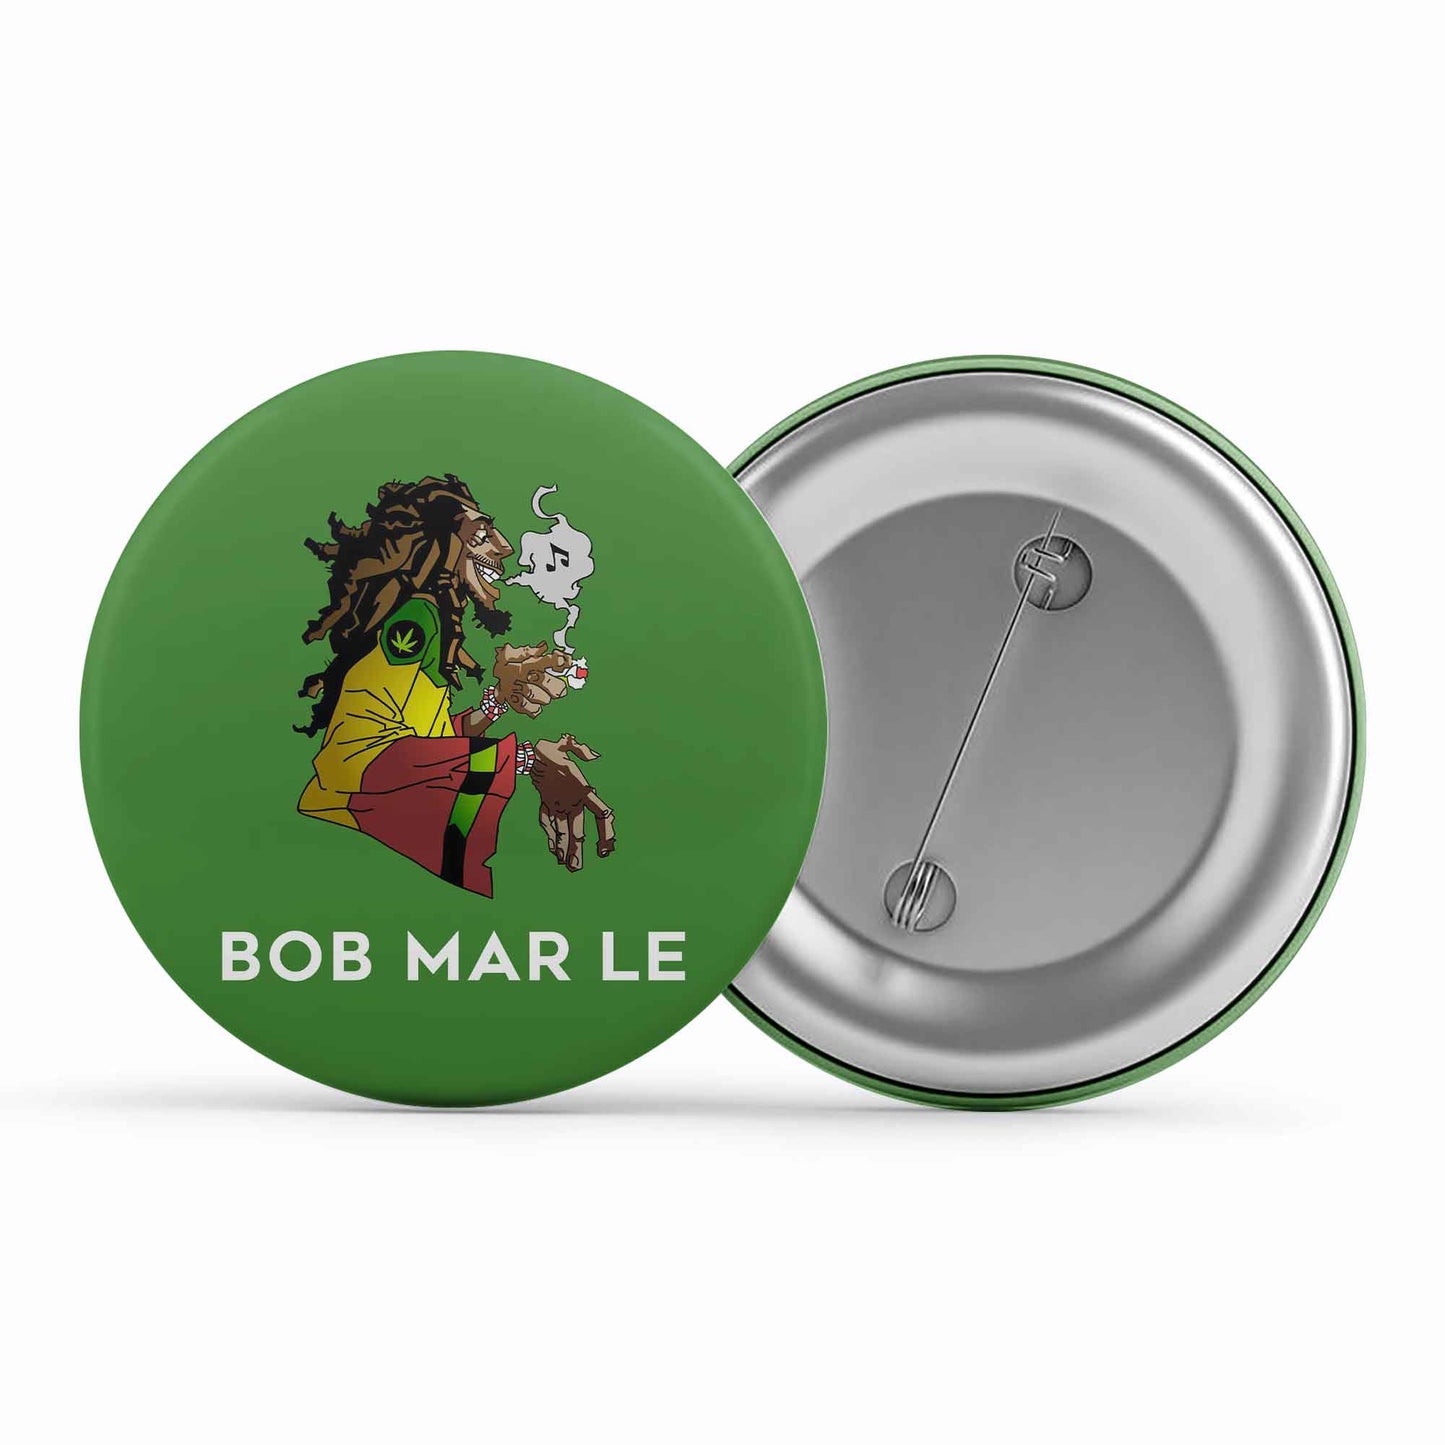 bob marley mar le badge pin button music band buy online india the banyan tee tbt men women girls boys unisex